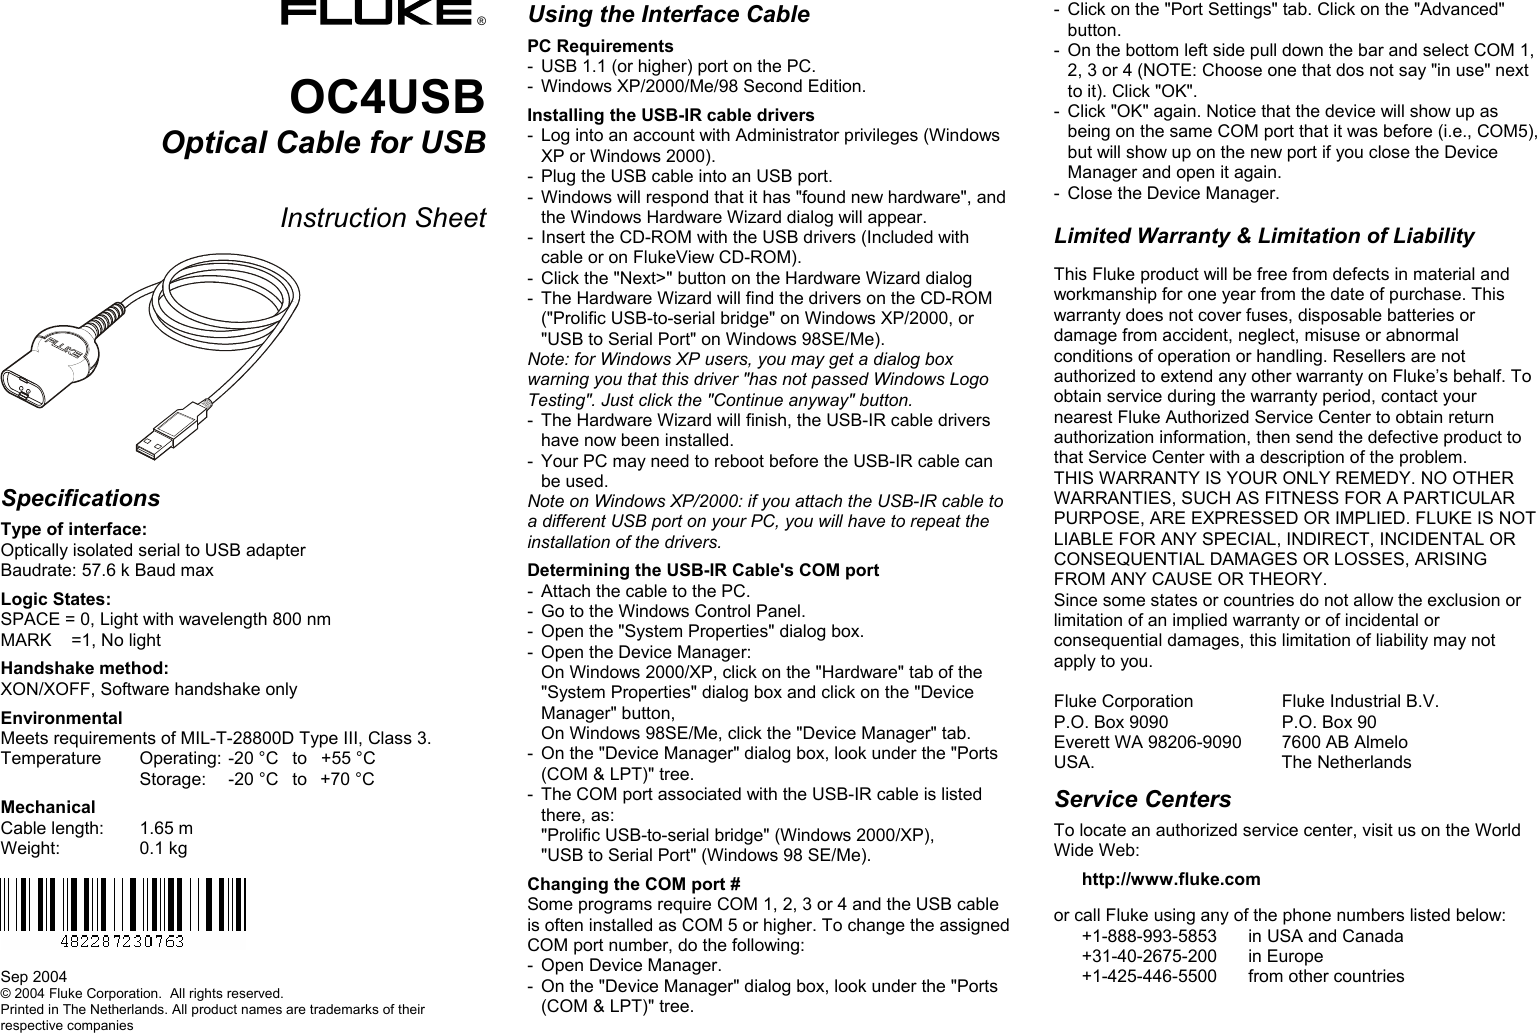 Page 1 of 1 - Fluke Fluke-Oc4Usb-Users-Manual Oc4usb